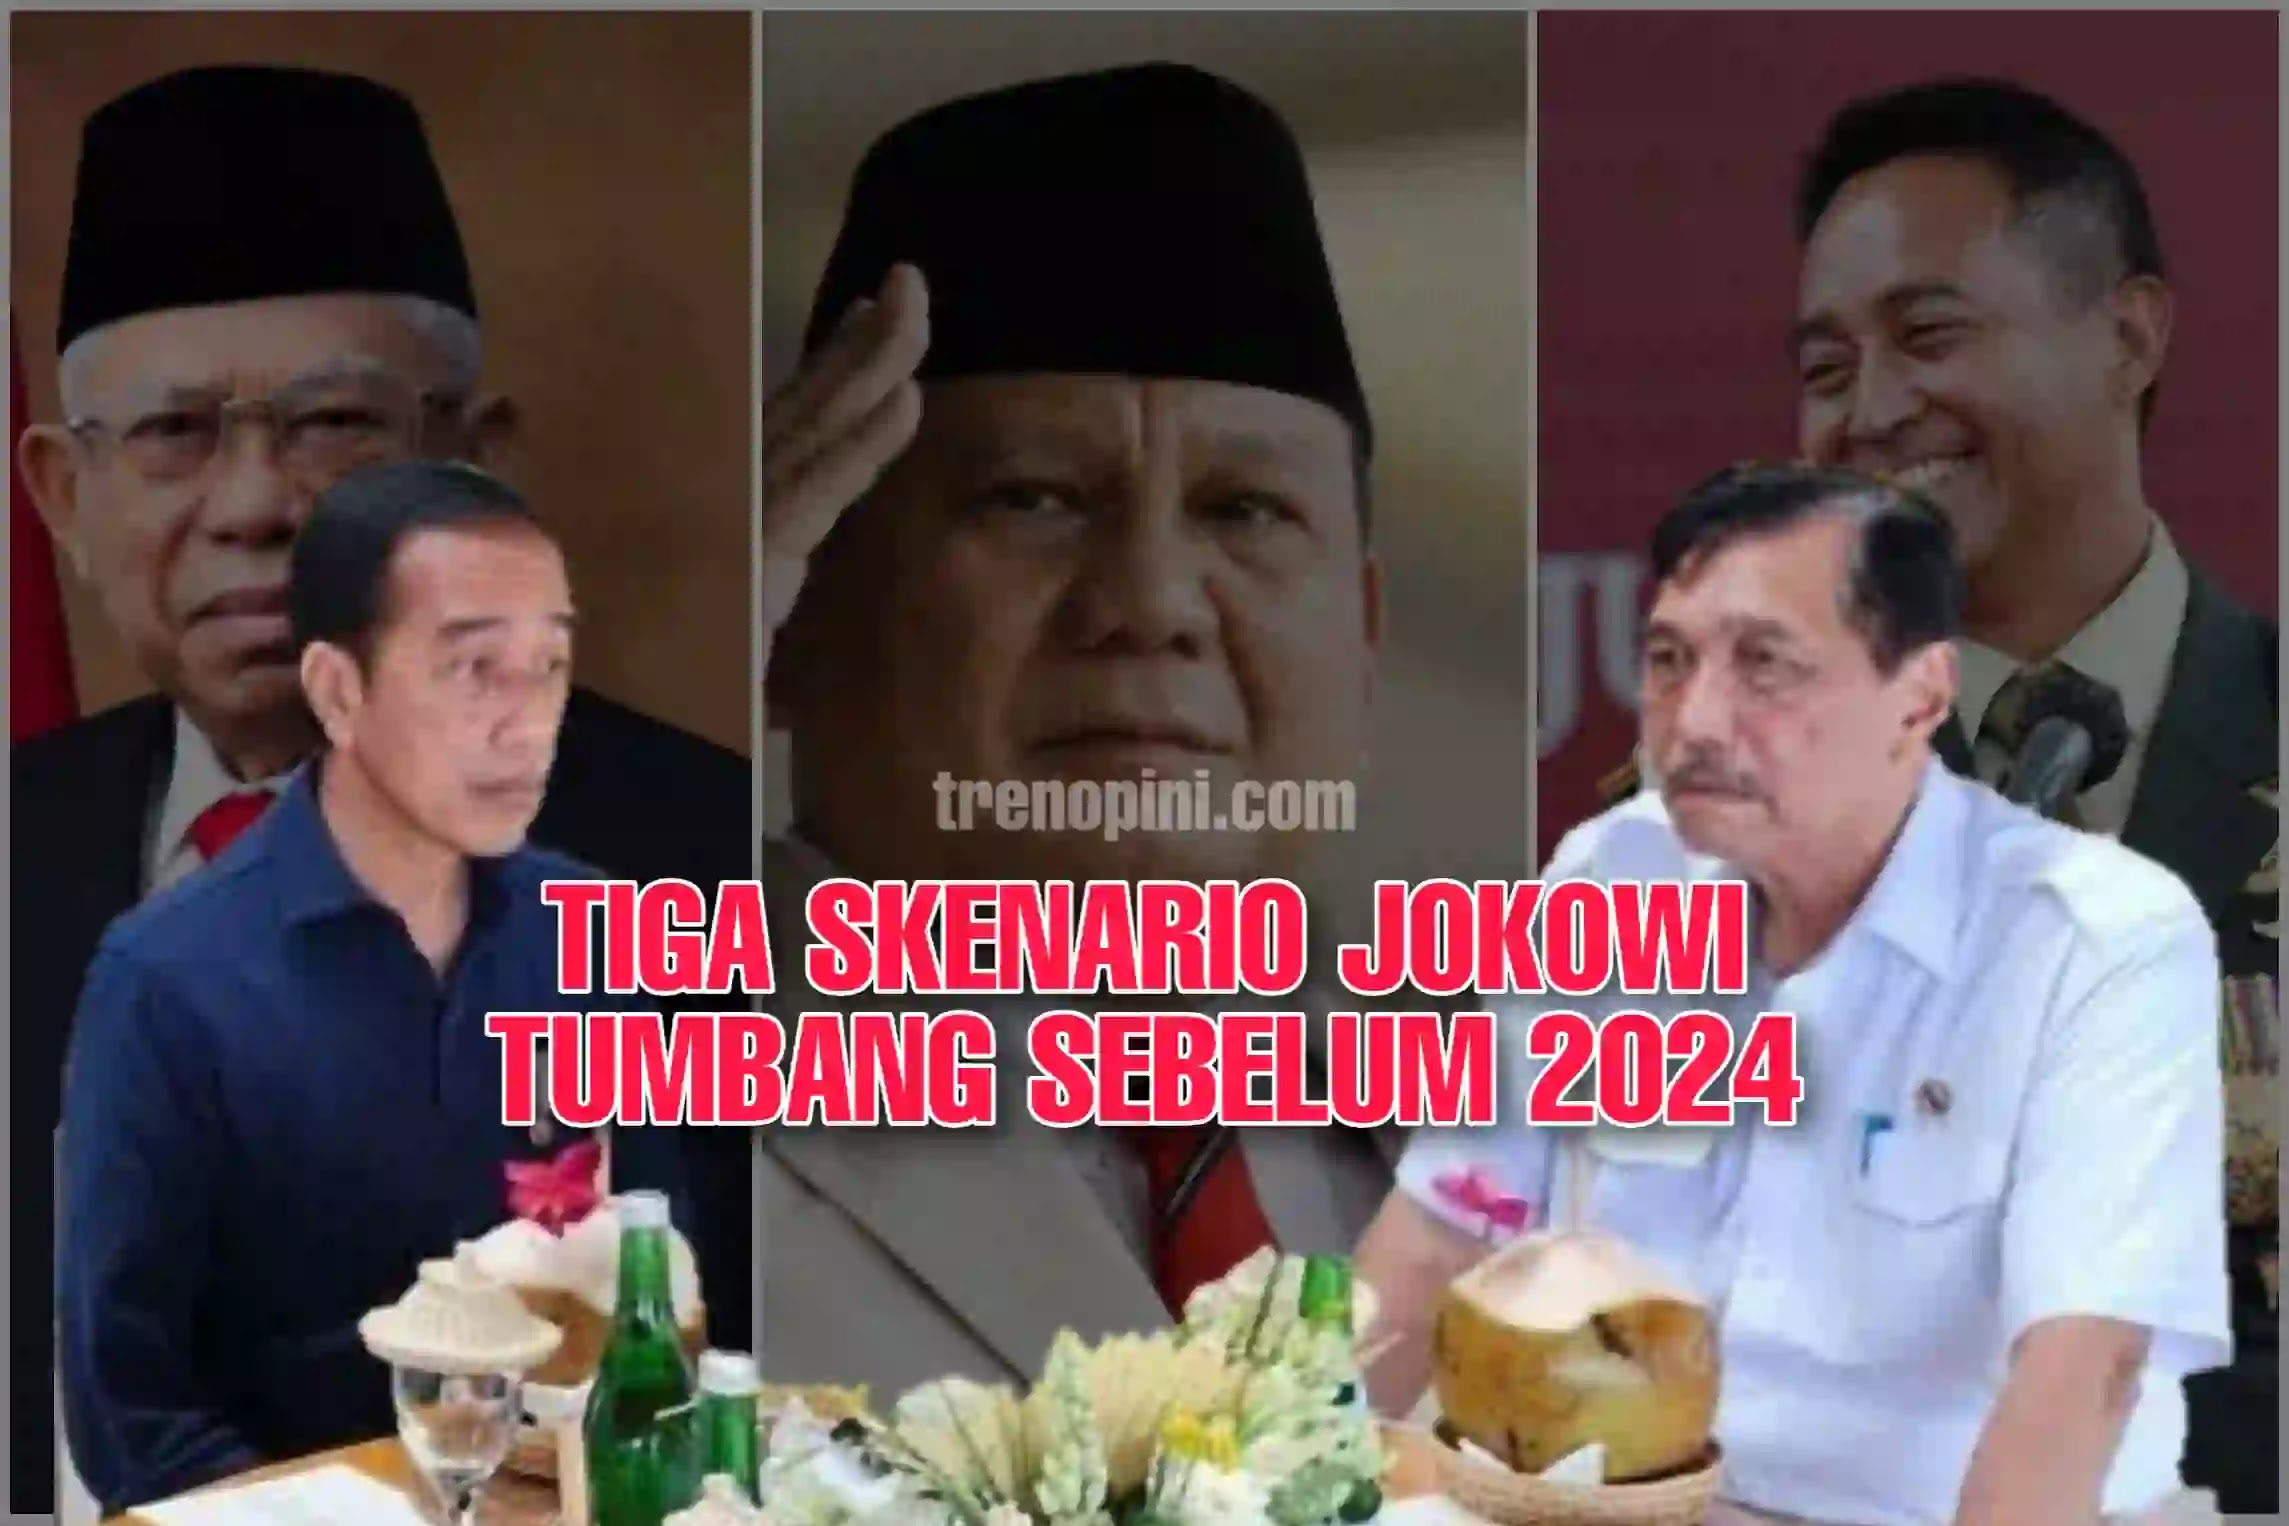 Jokowi dituntut mundur